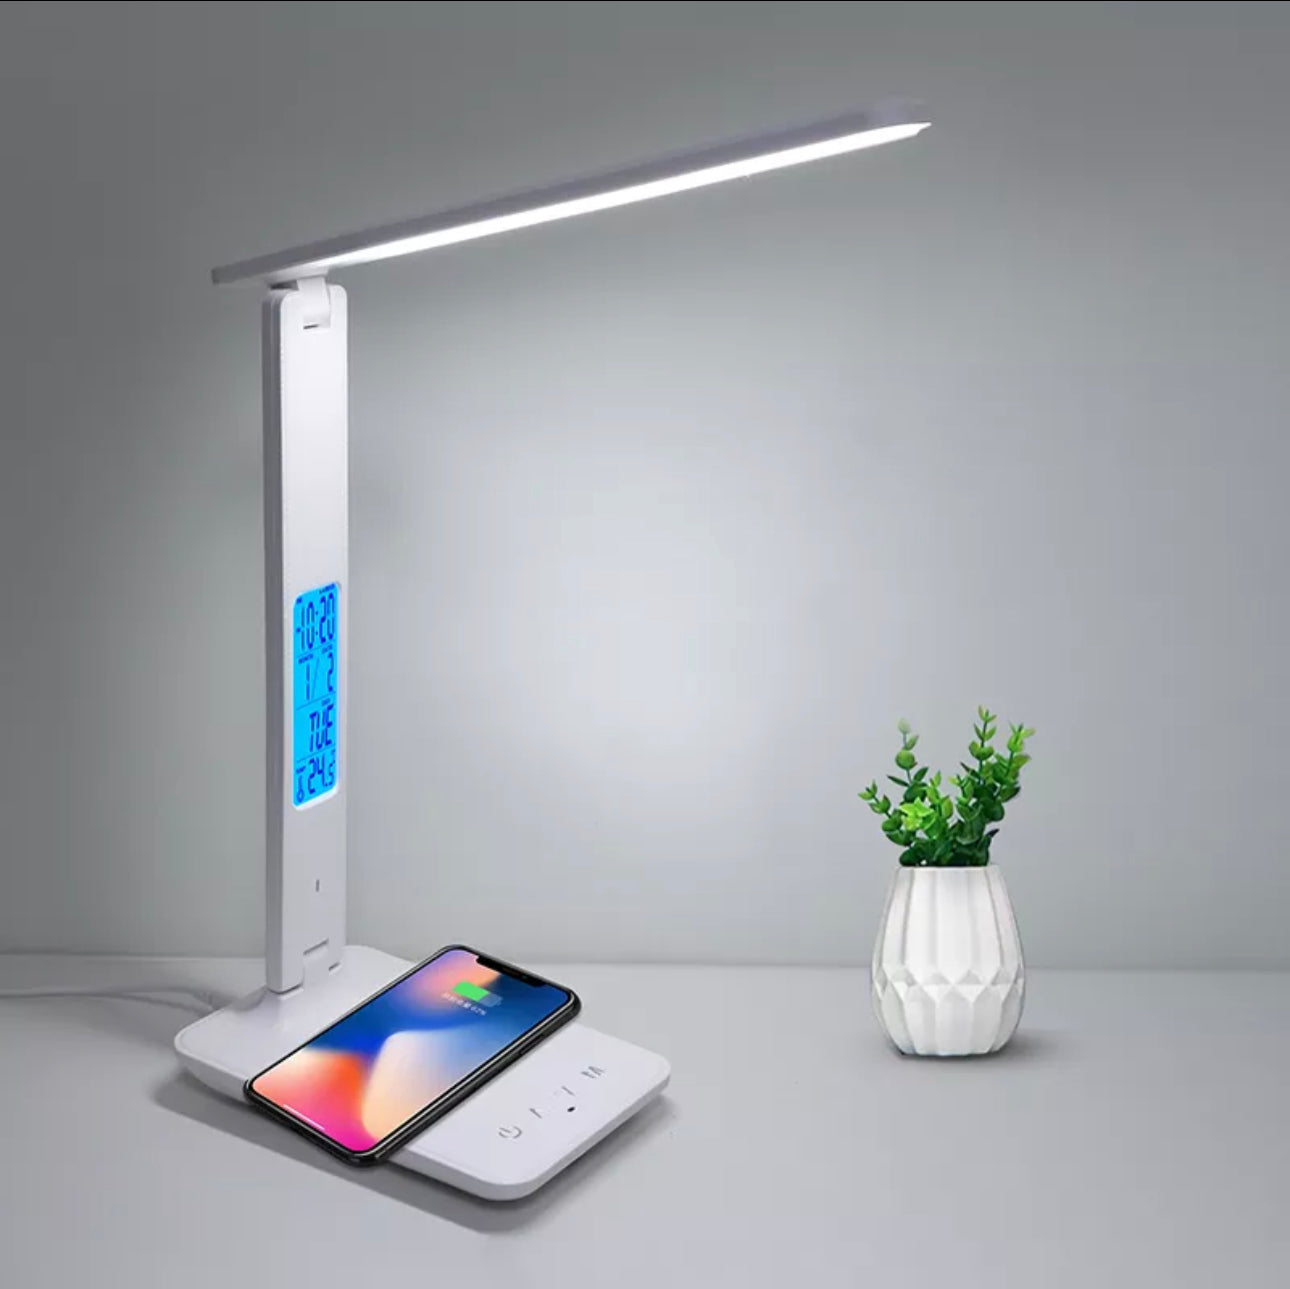 LAOPAO LED Desk Lamp & Wireless Charging